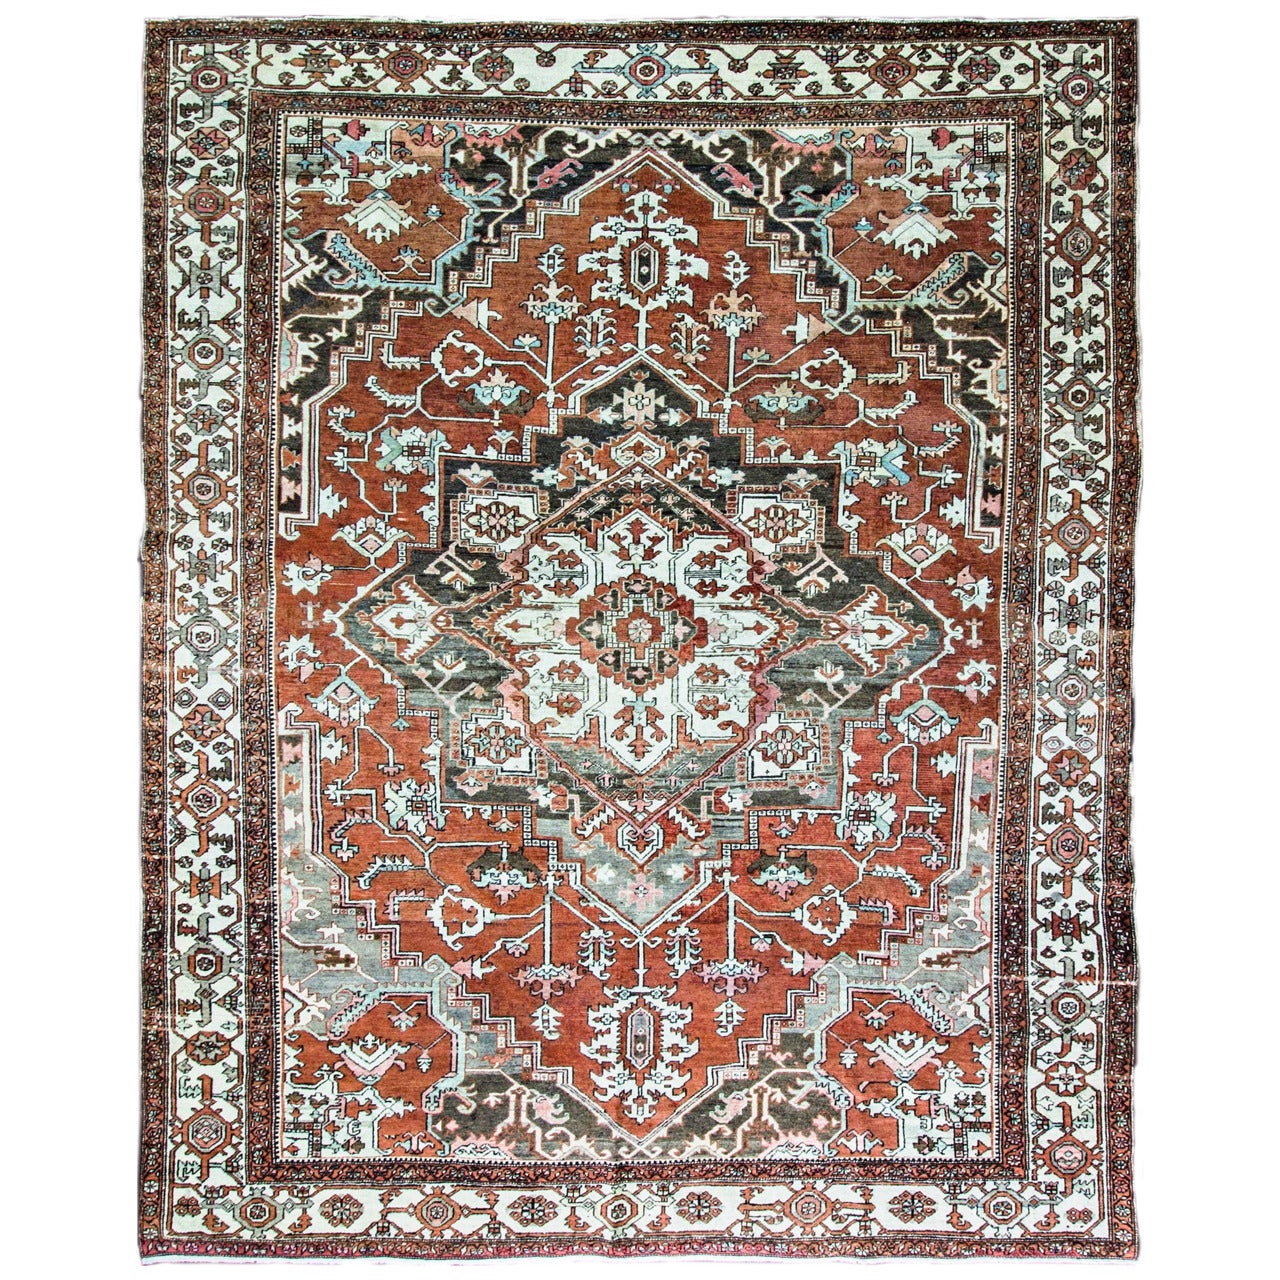 Antique Serapi Carpet, Persian